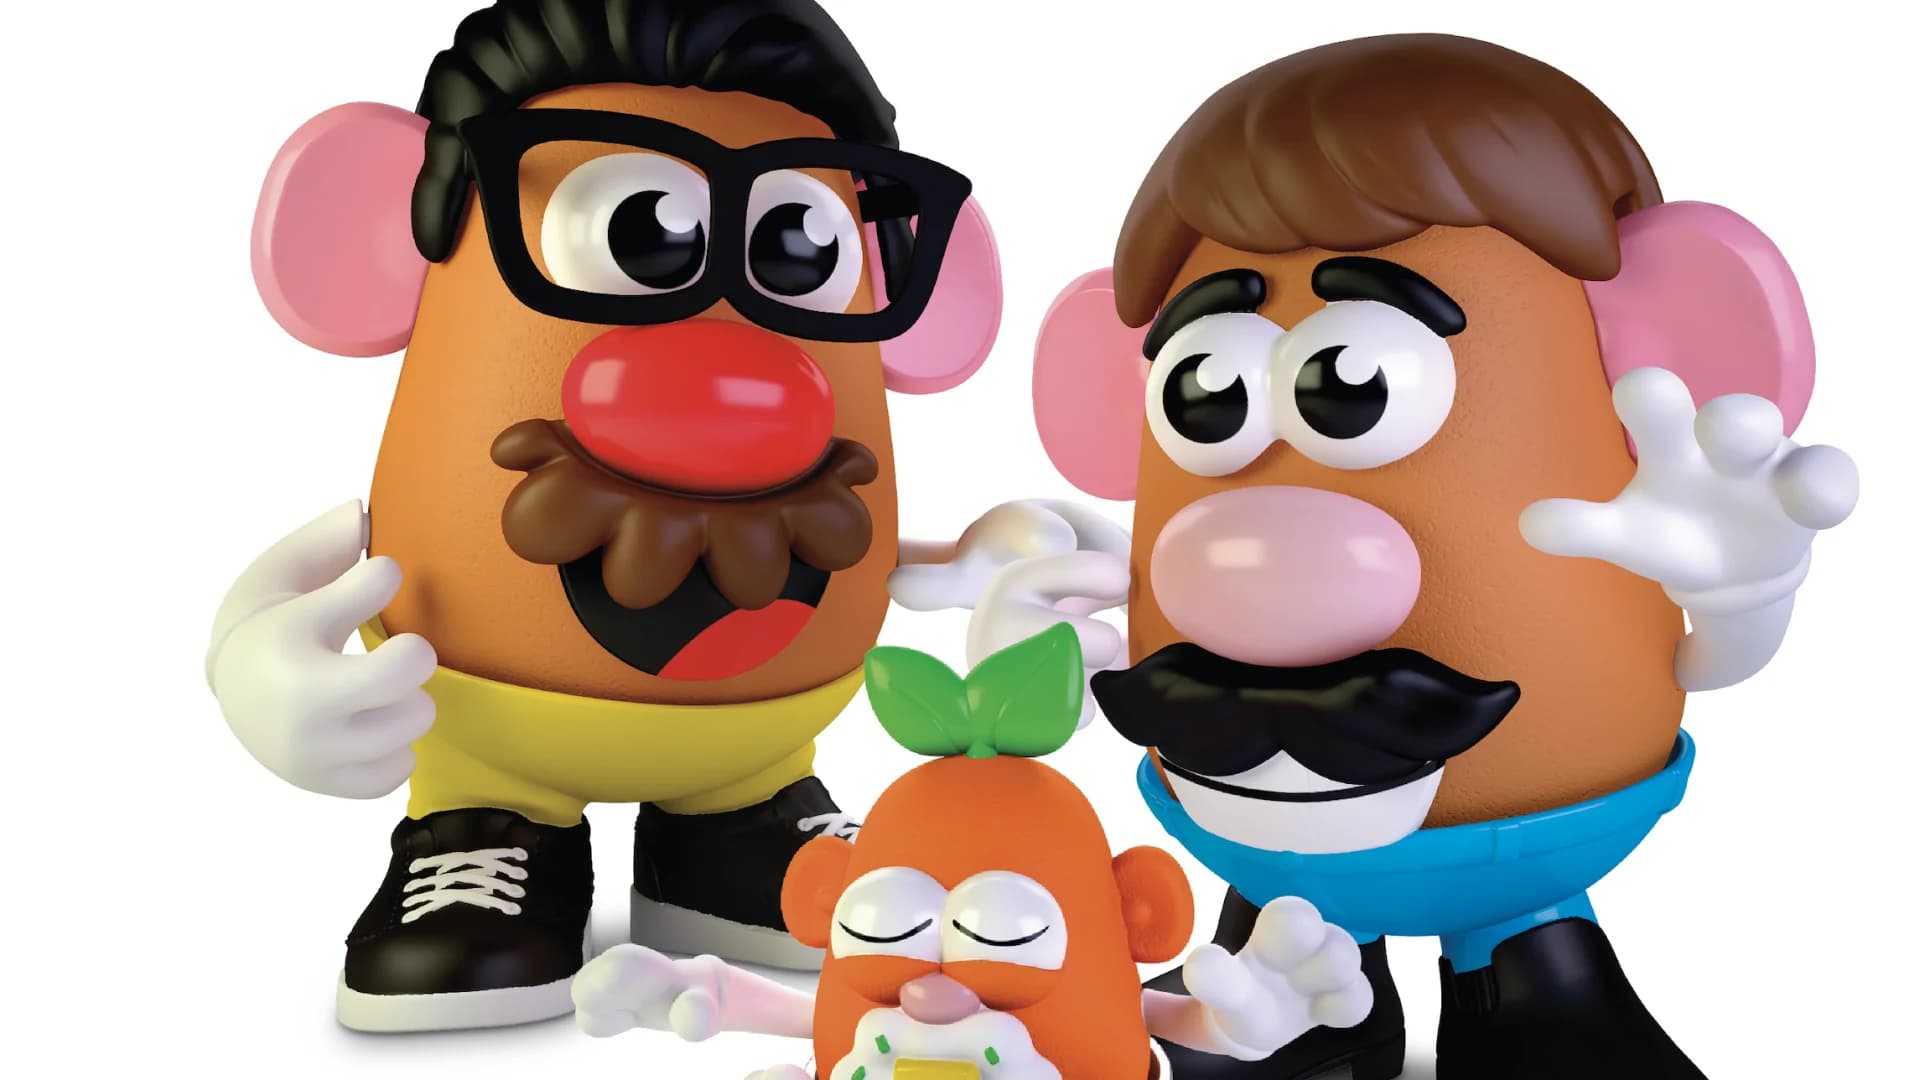 Mr. Potato Head brand goes gender neutral - sort of 